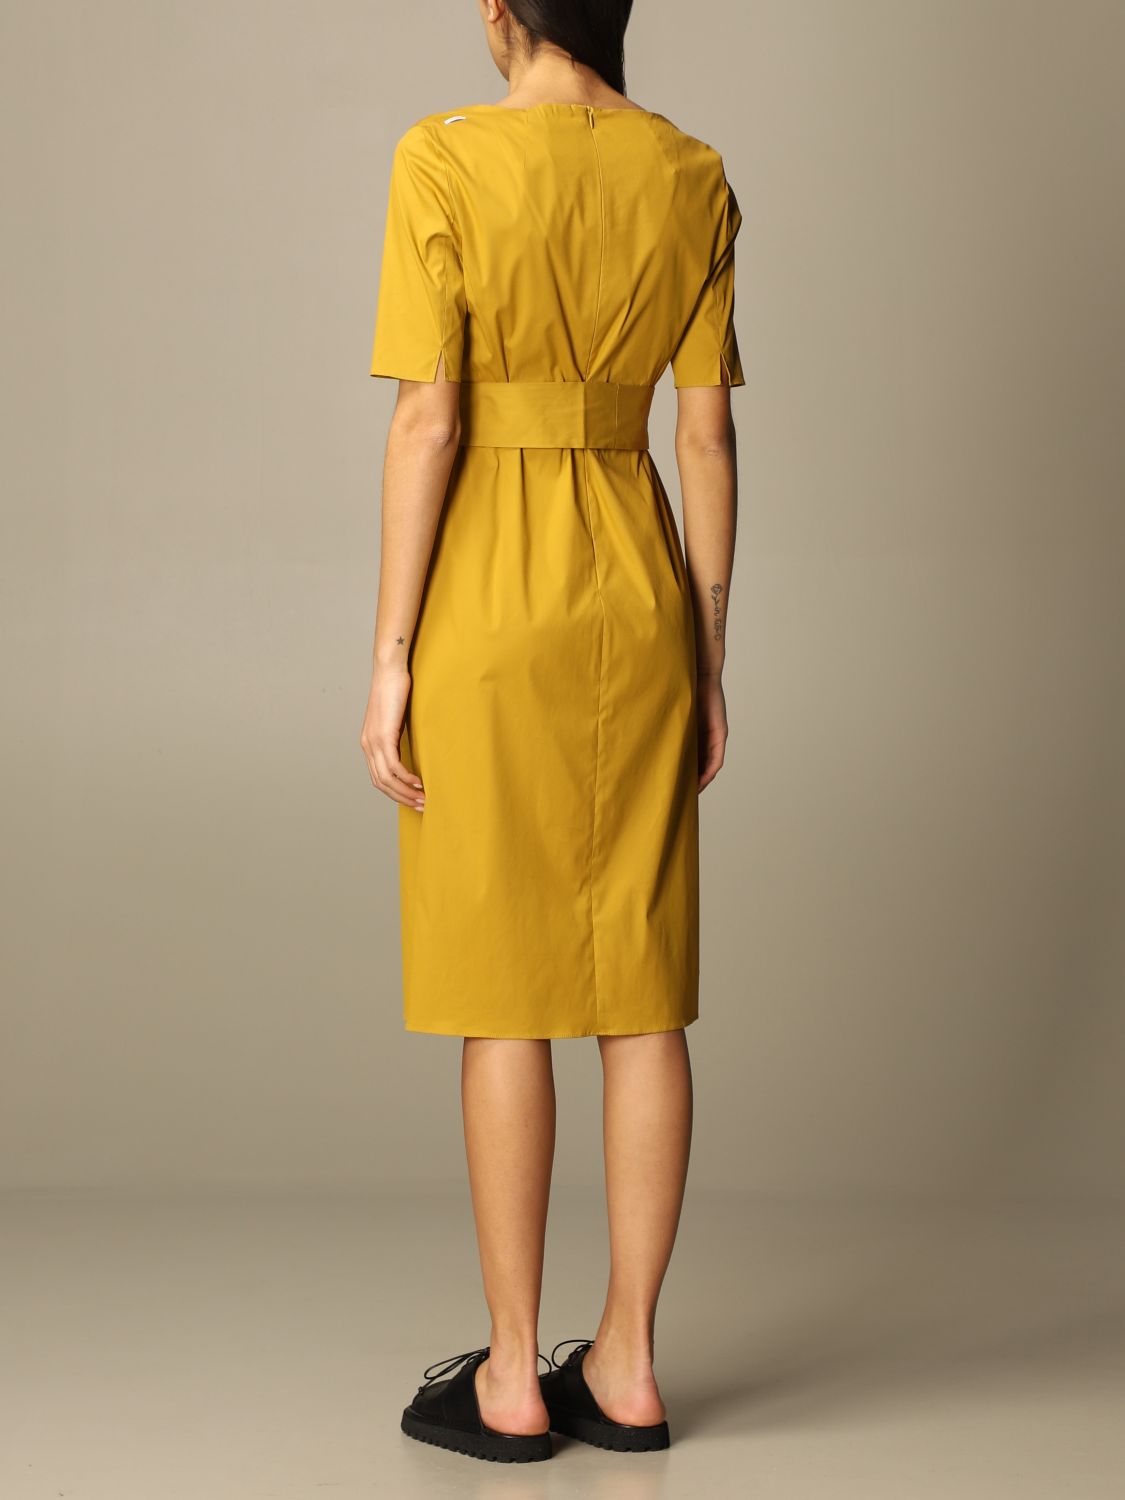 S MAX MARA: Liriche dress in cotton blend - Yellow | S Max Mara dress